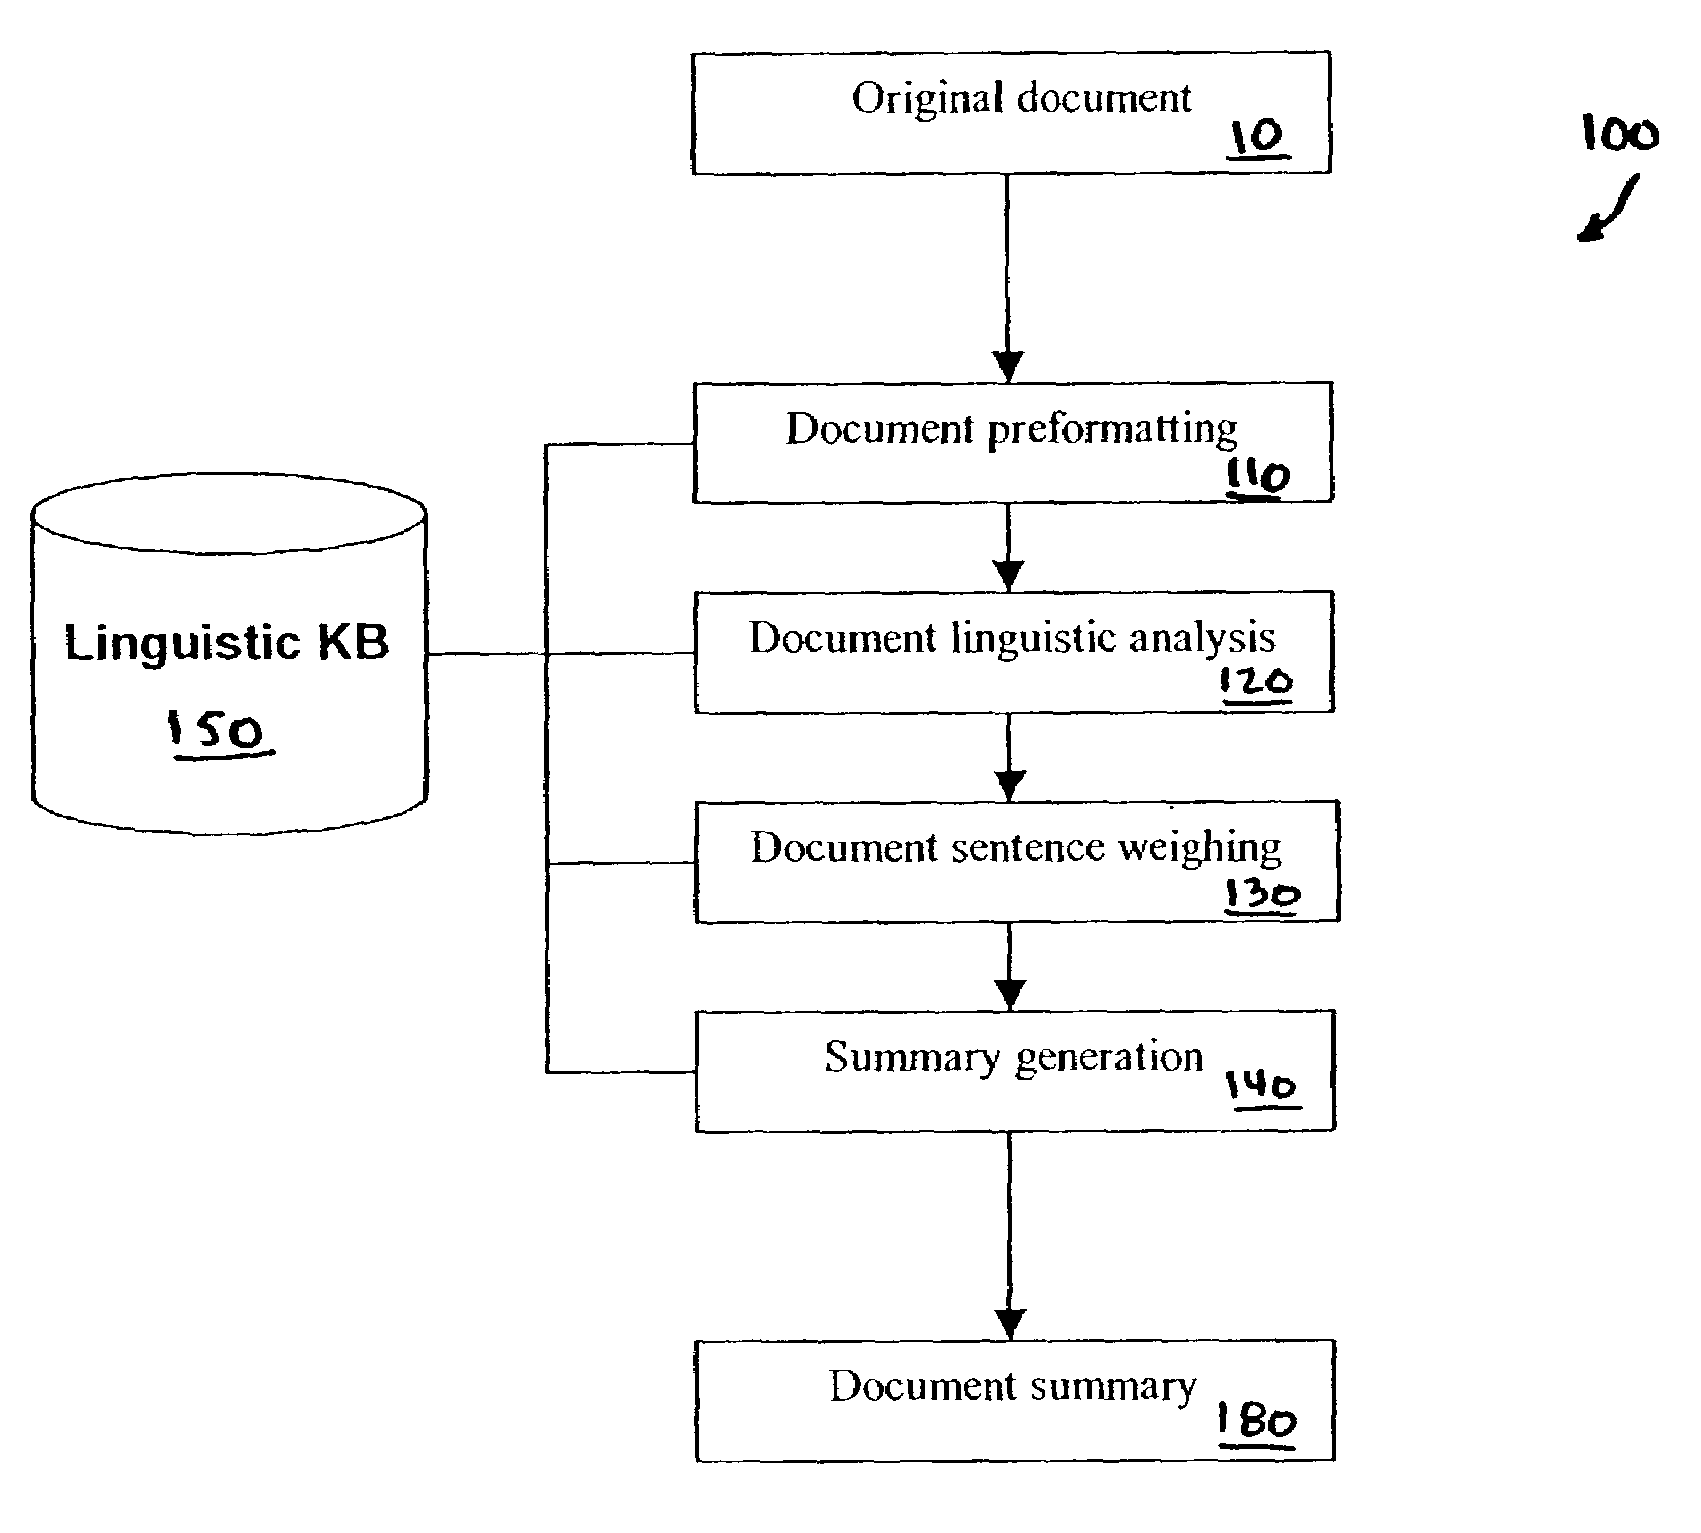 Computer based summarization of natural language documents